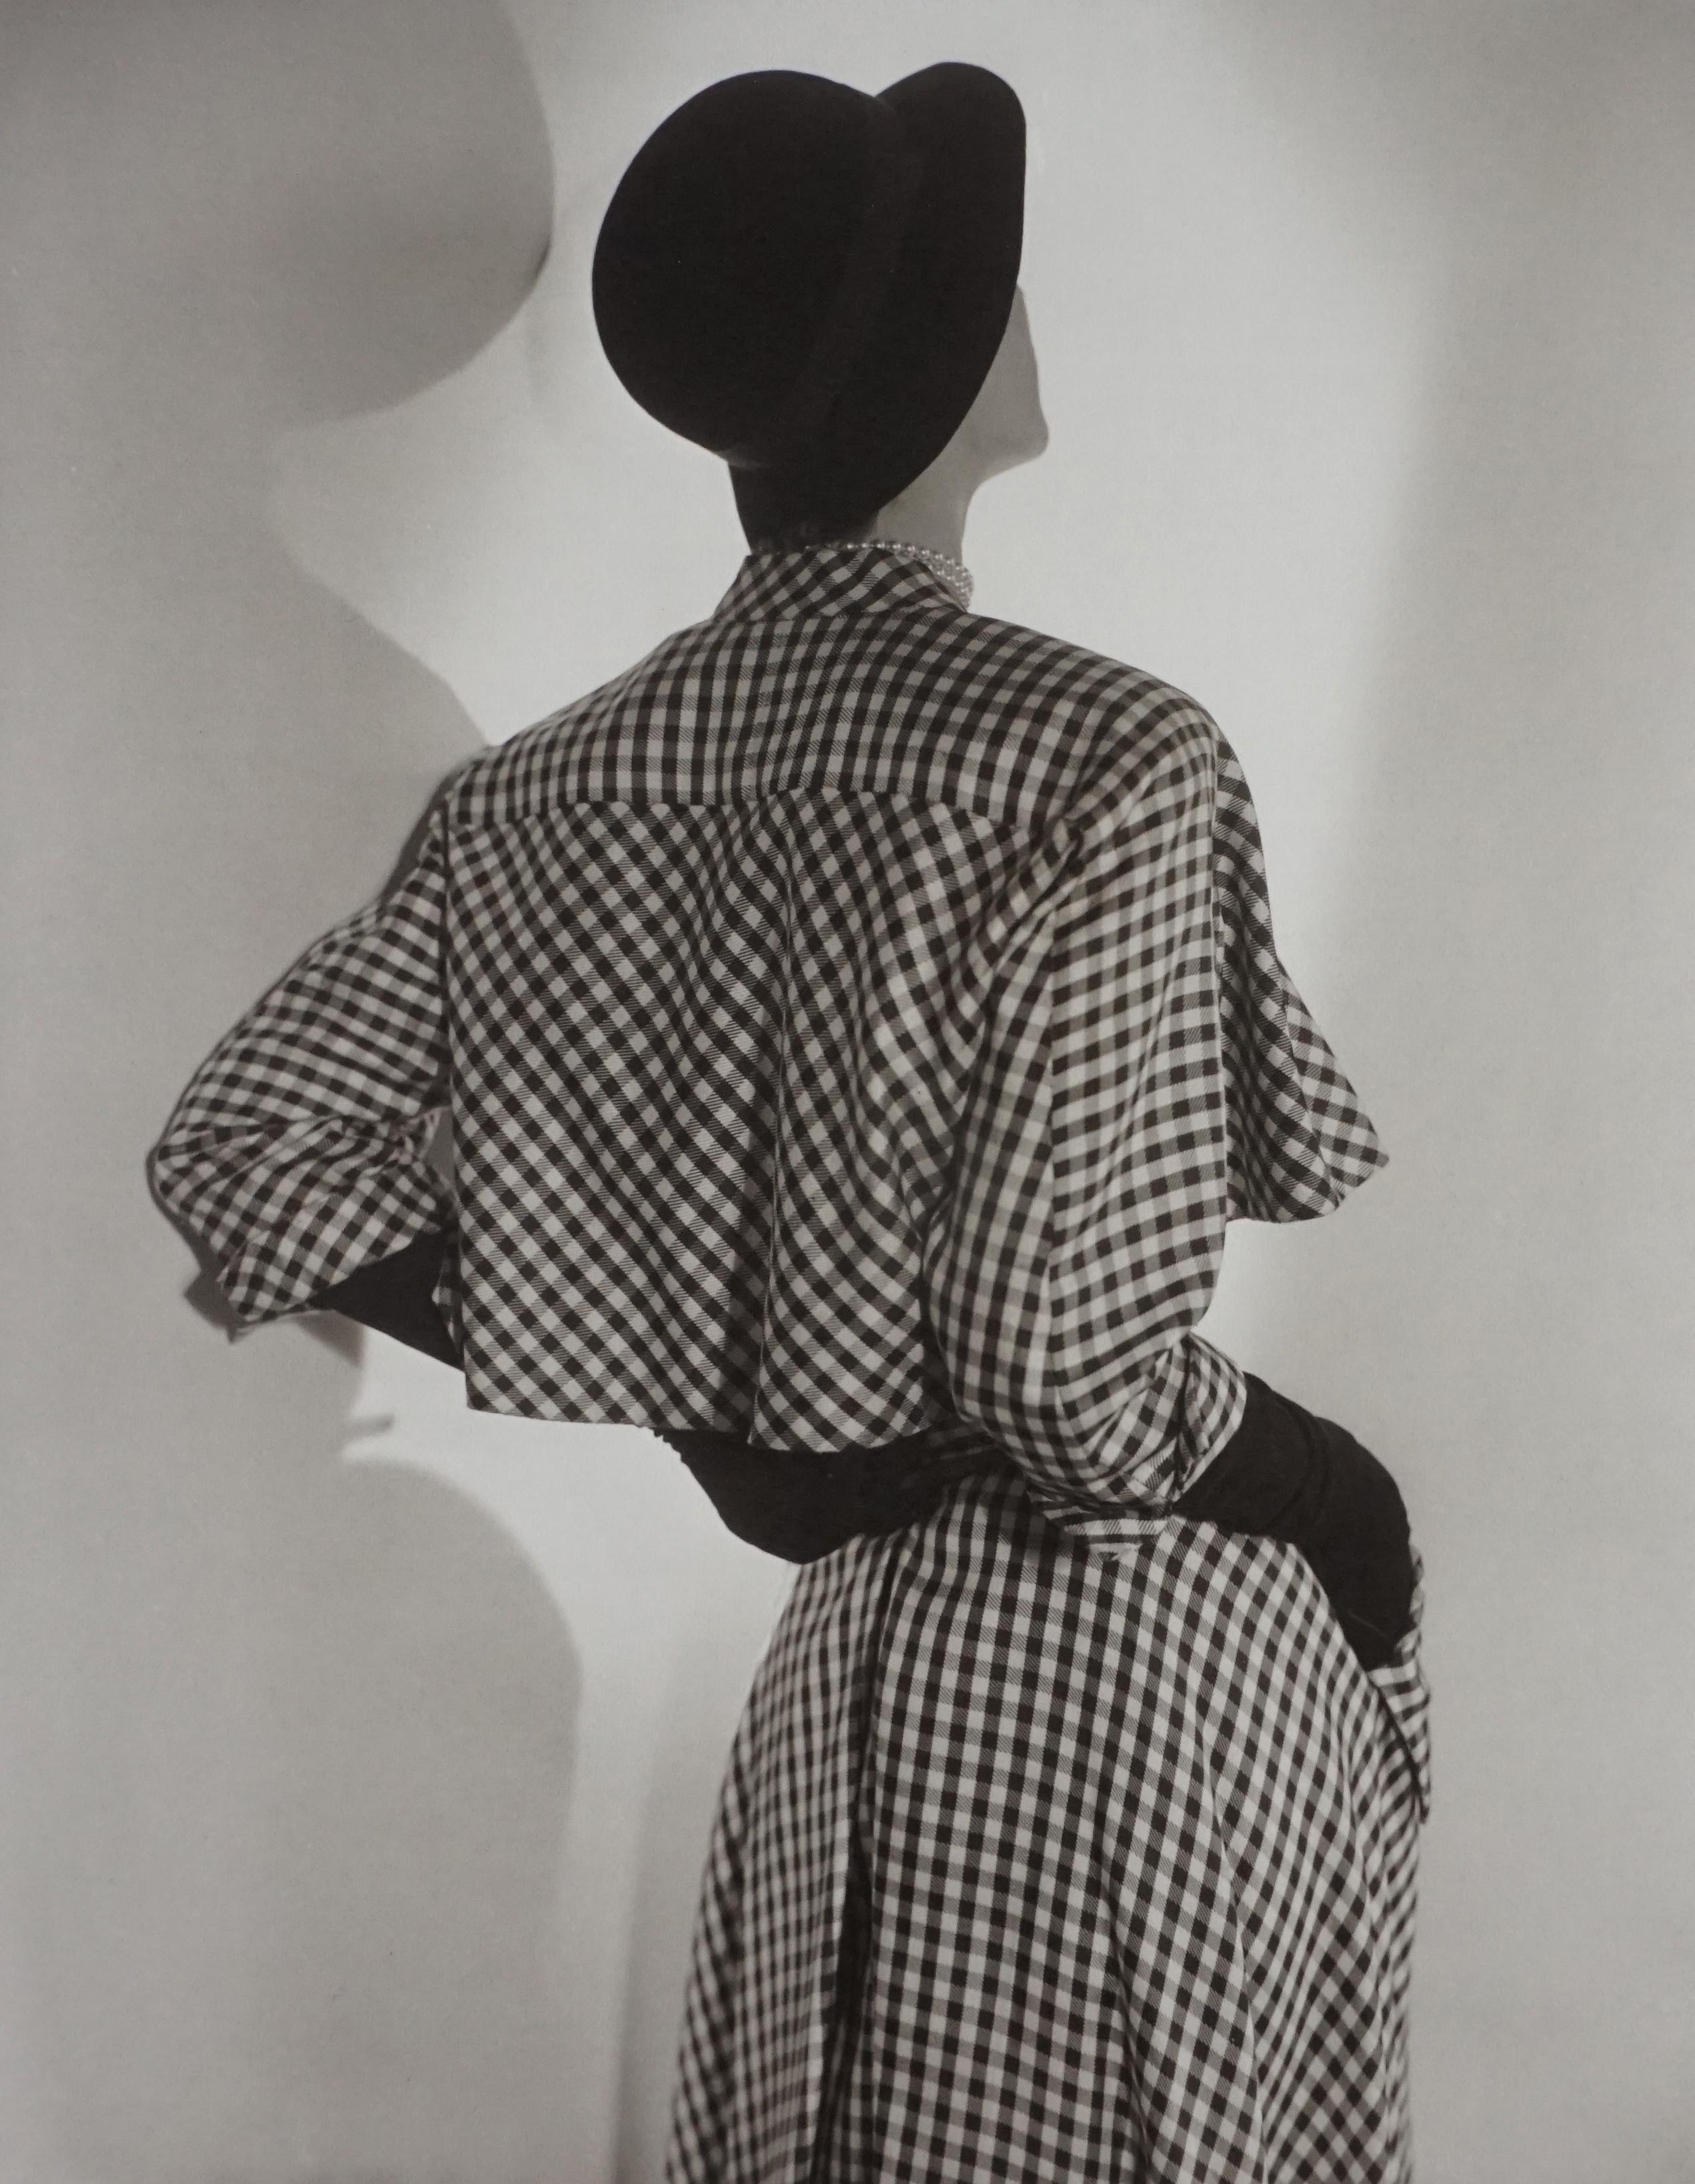 Horst P. Horst Black and White Photograph - Balenciaga Checkered Suit, Jean Patchett, 1949